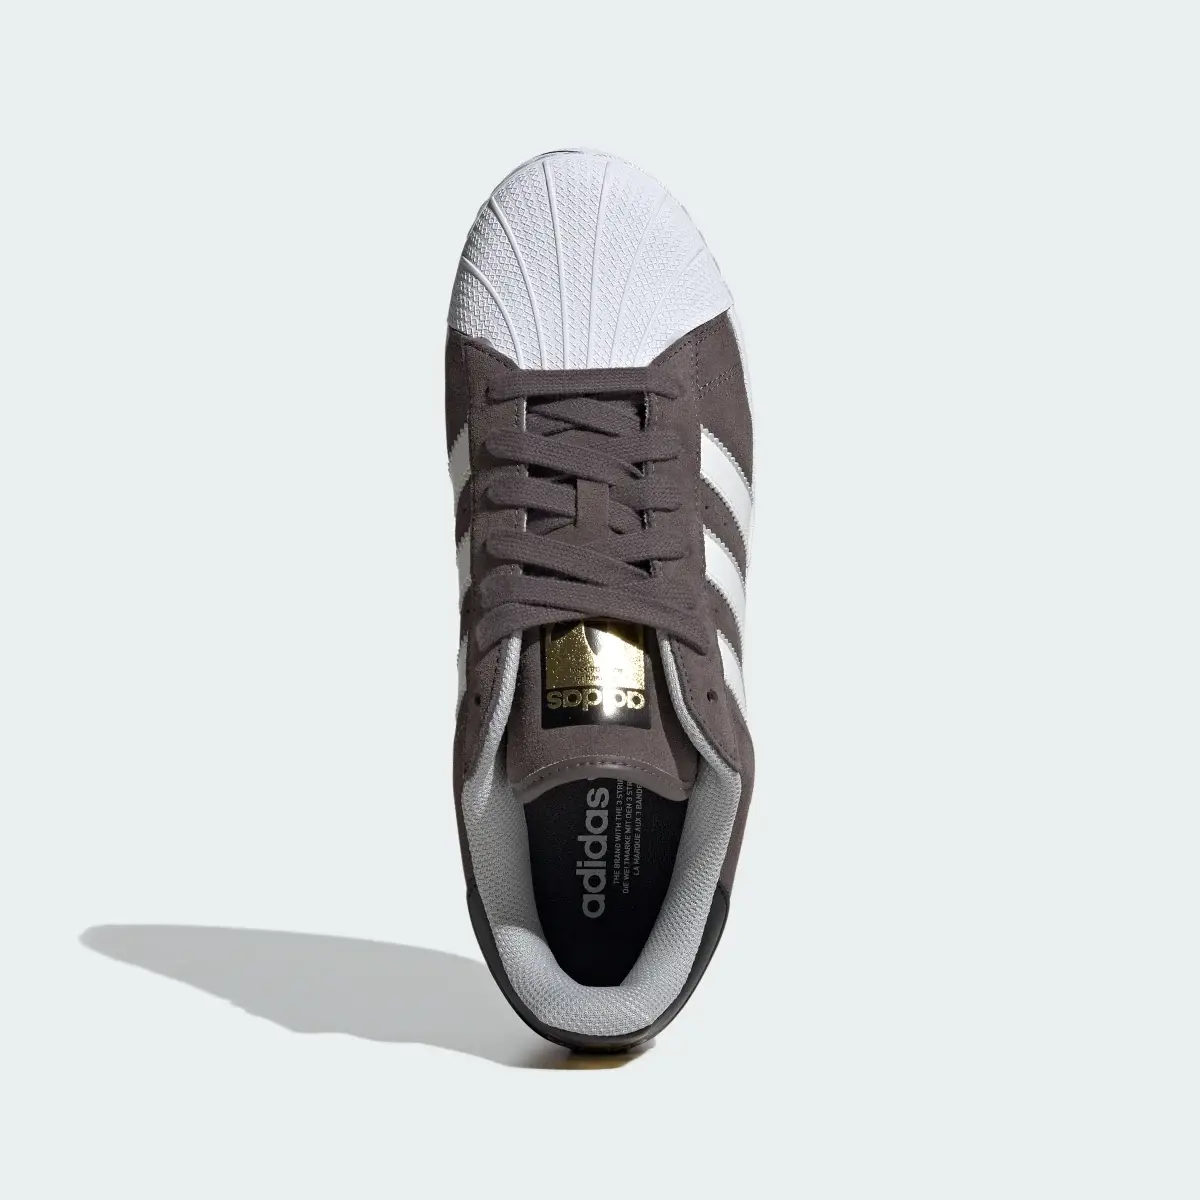 Adidas Scarpe Superstar XLG. 3